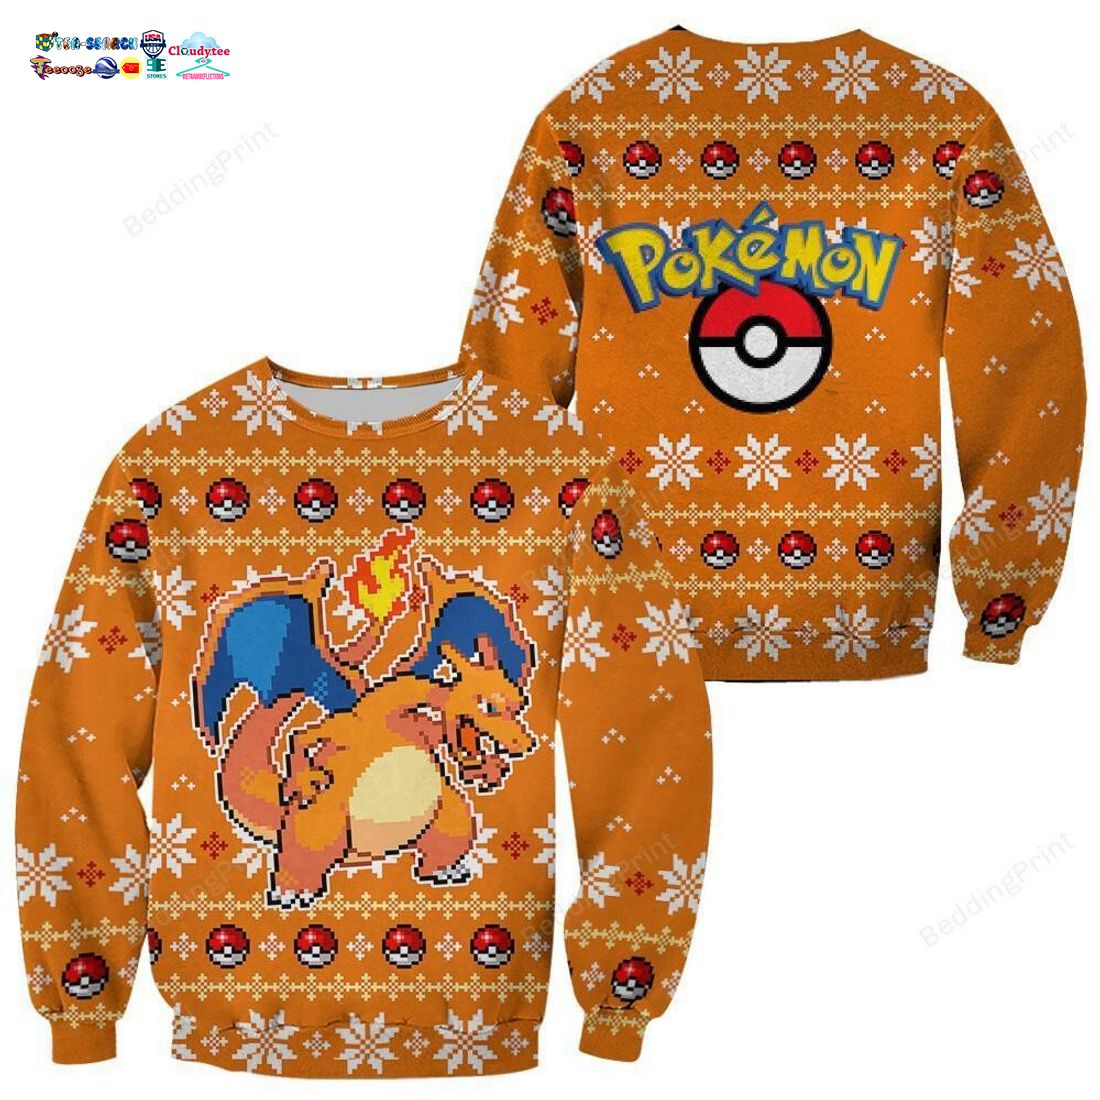 Pokemon Charizard Pokeball Ugly Christmas Sweater - Natural and awesome